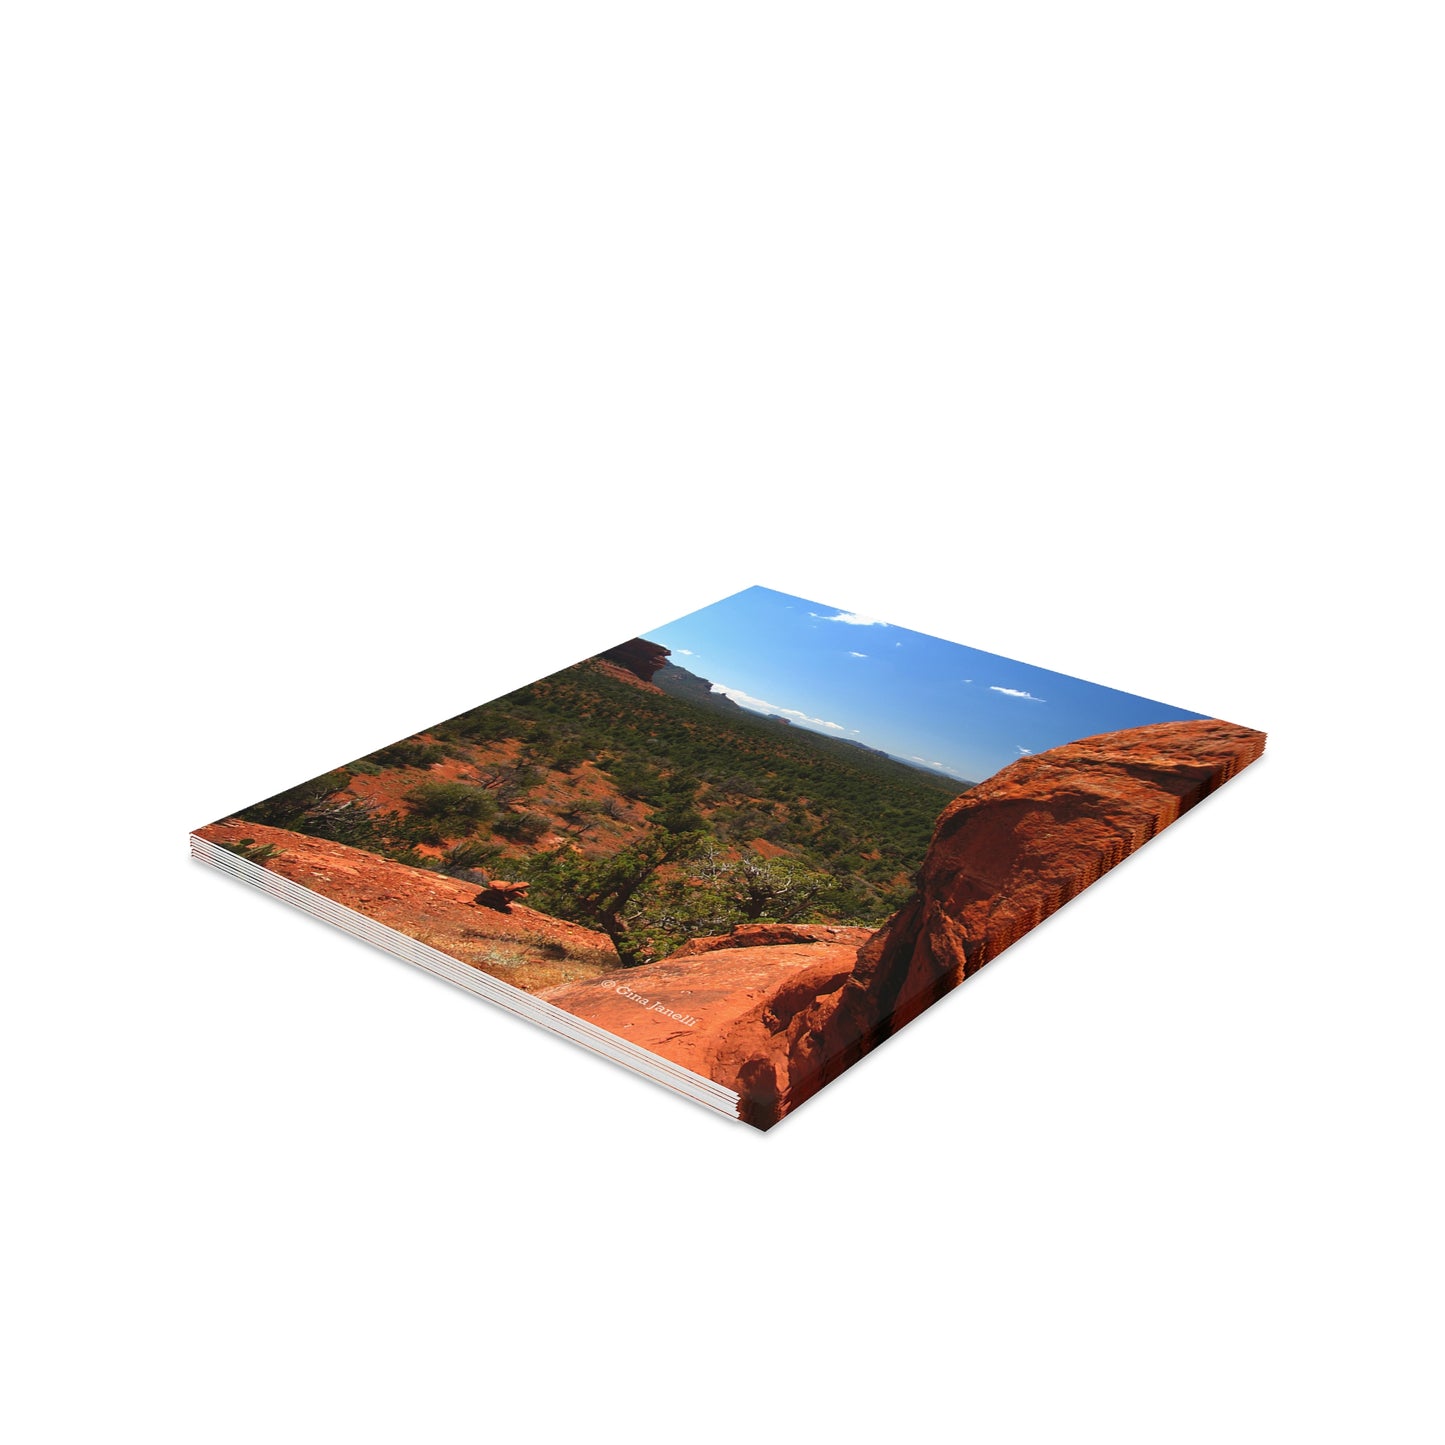 Red Rocks of Sedona Az.              Greeting cards (8, 16, and 24 pcs)